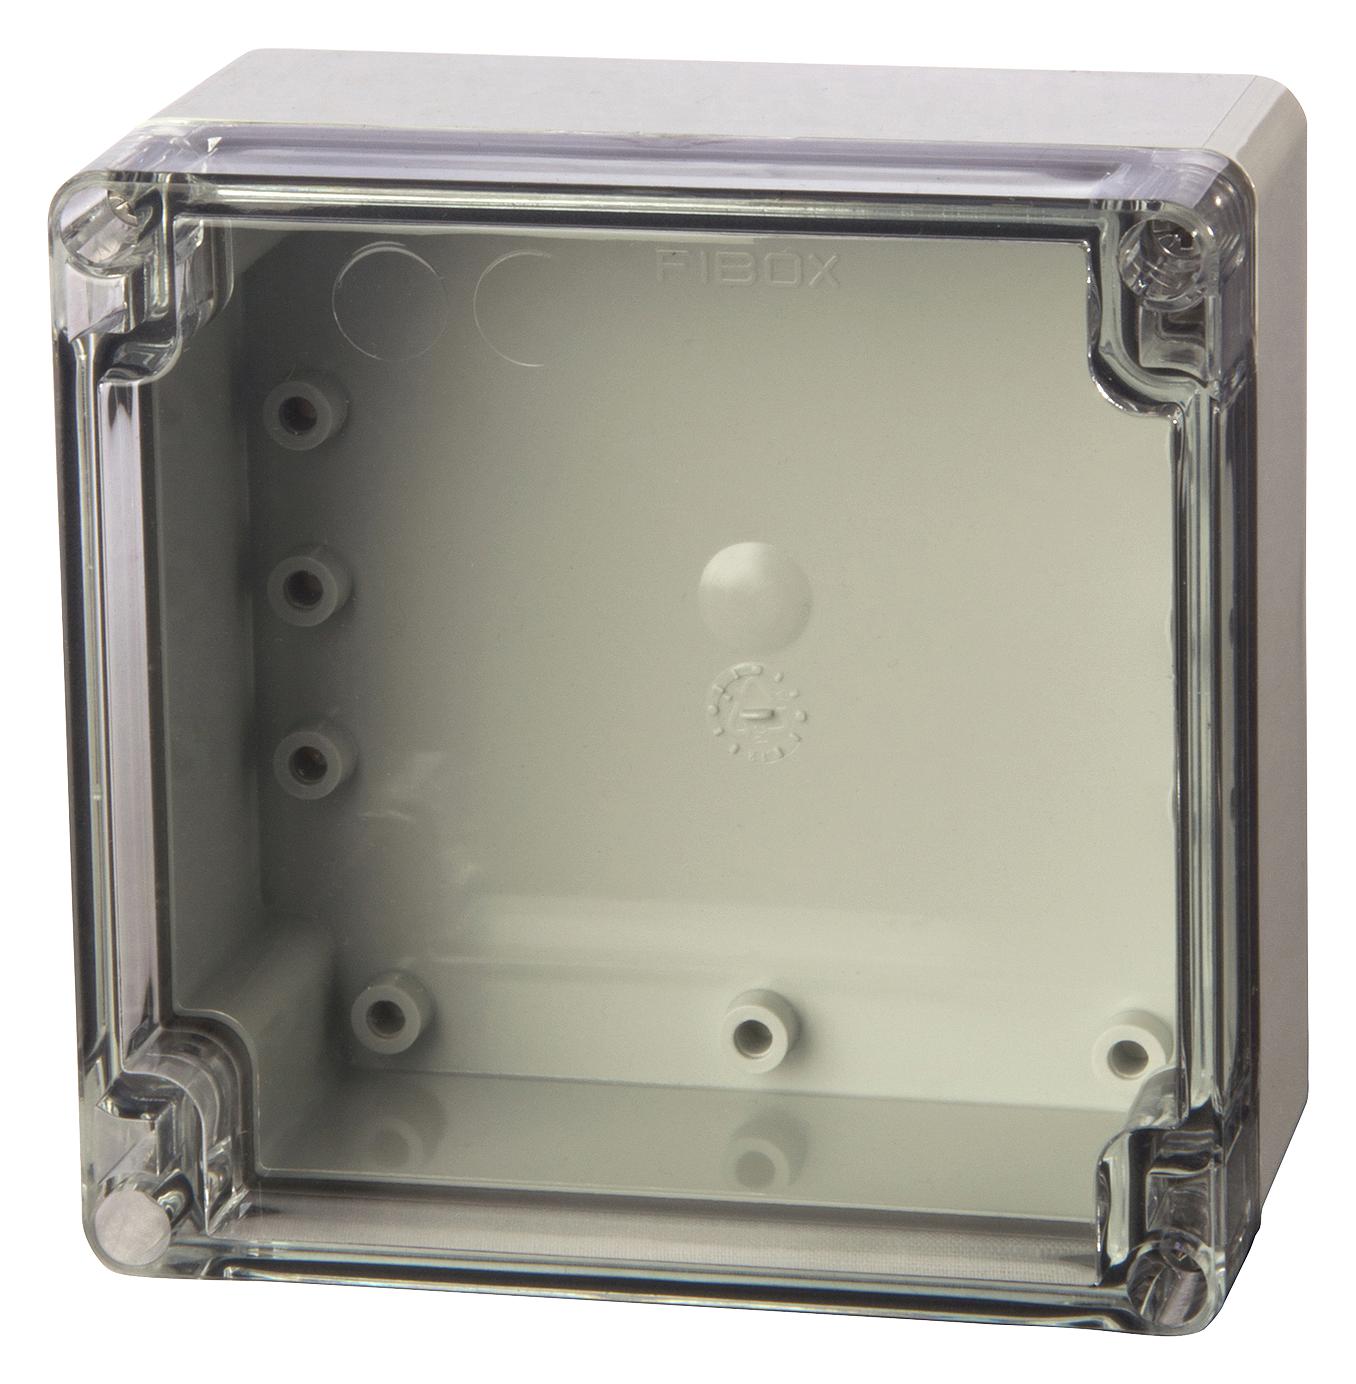 Fibox Ab 121207 Enclosure Enclosure, Multipurpose, Grey/clr, Abs